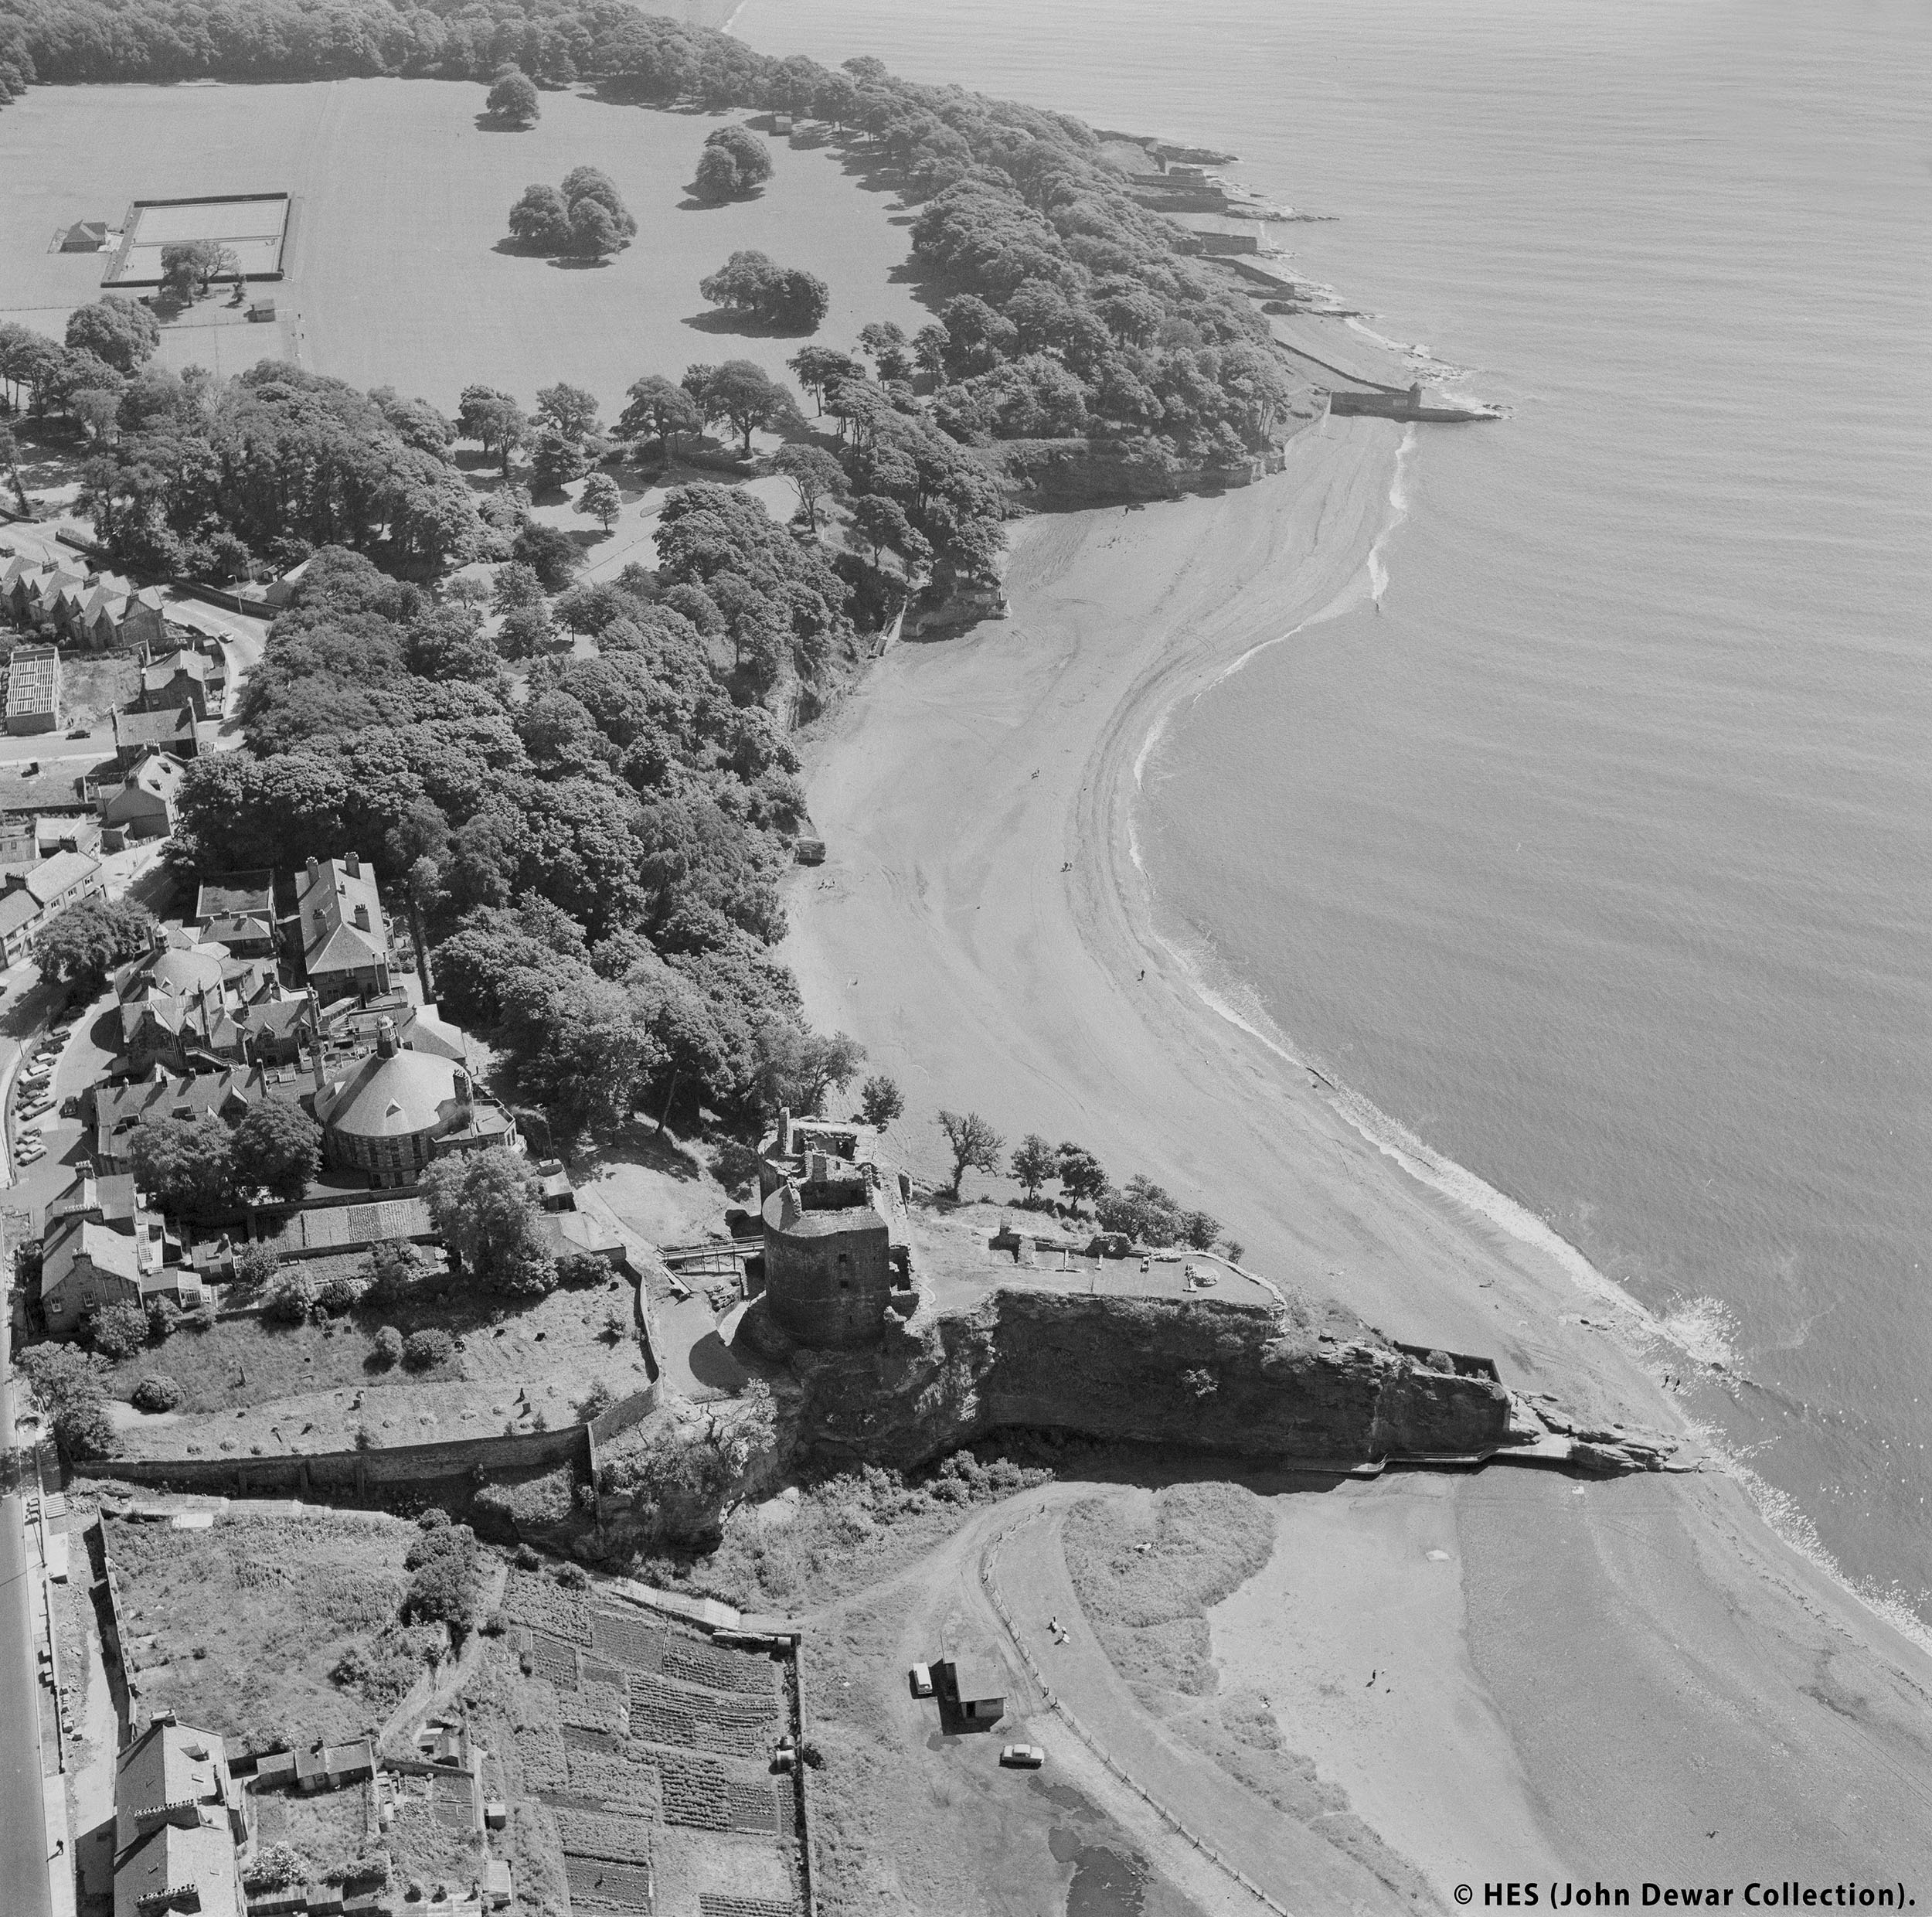 An archive image of Kirkcaldy beach